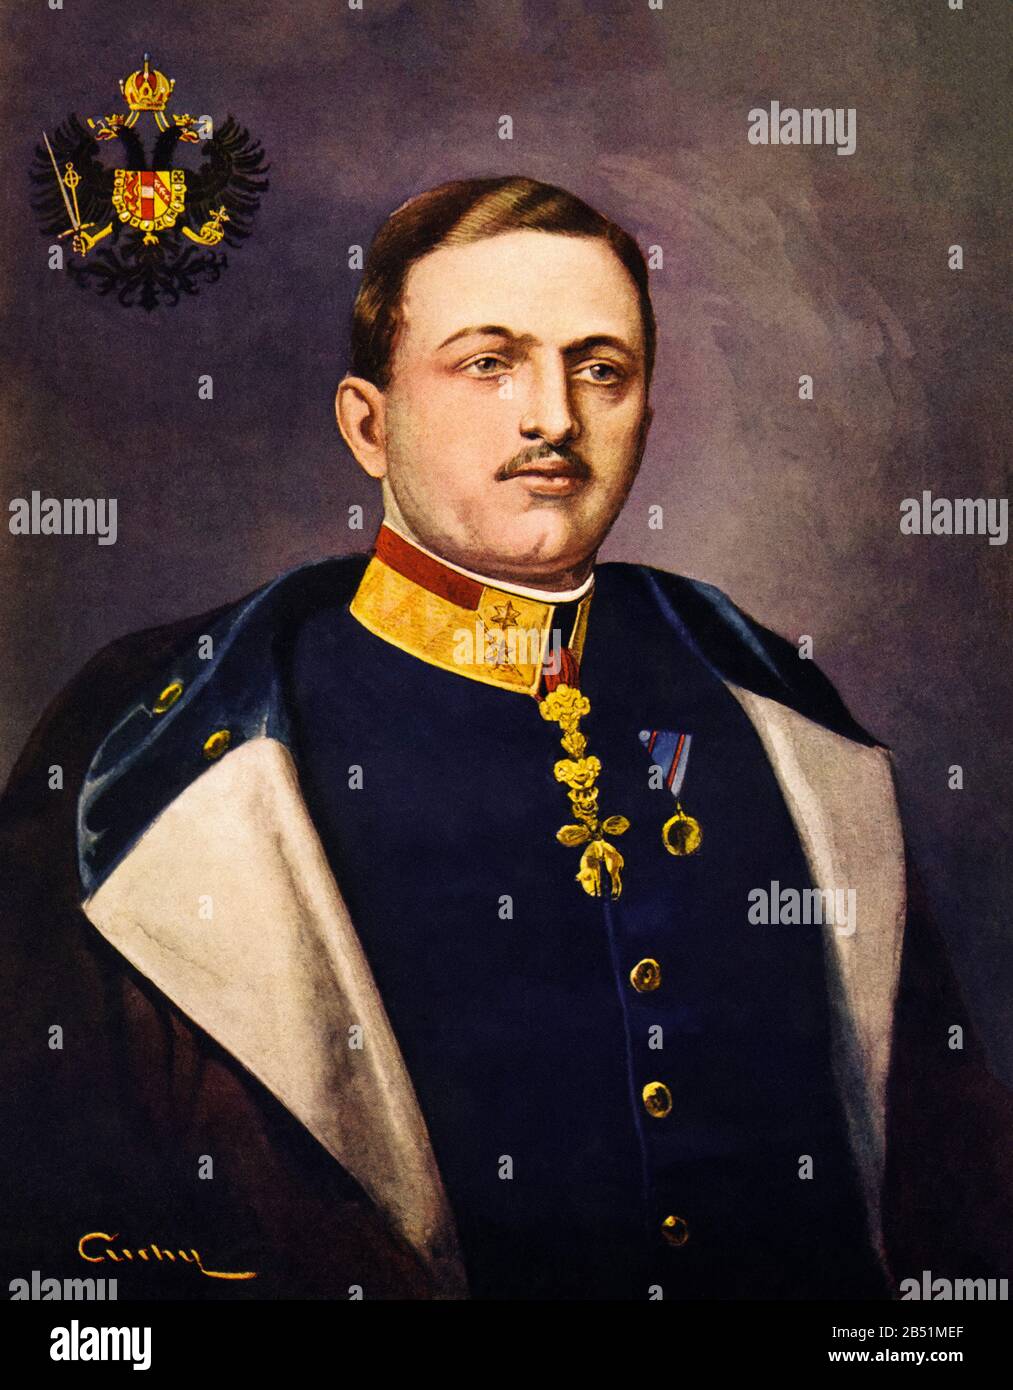 Color portrait of Charles of Habsburg-Lorraine and Saxony. Karl Franz Josef Ludwig Hubert Georg Maria von Habsburg-Lothringen (1887 - 1922), was the l Stock Photo